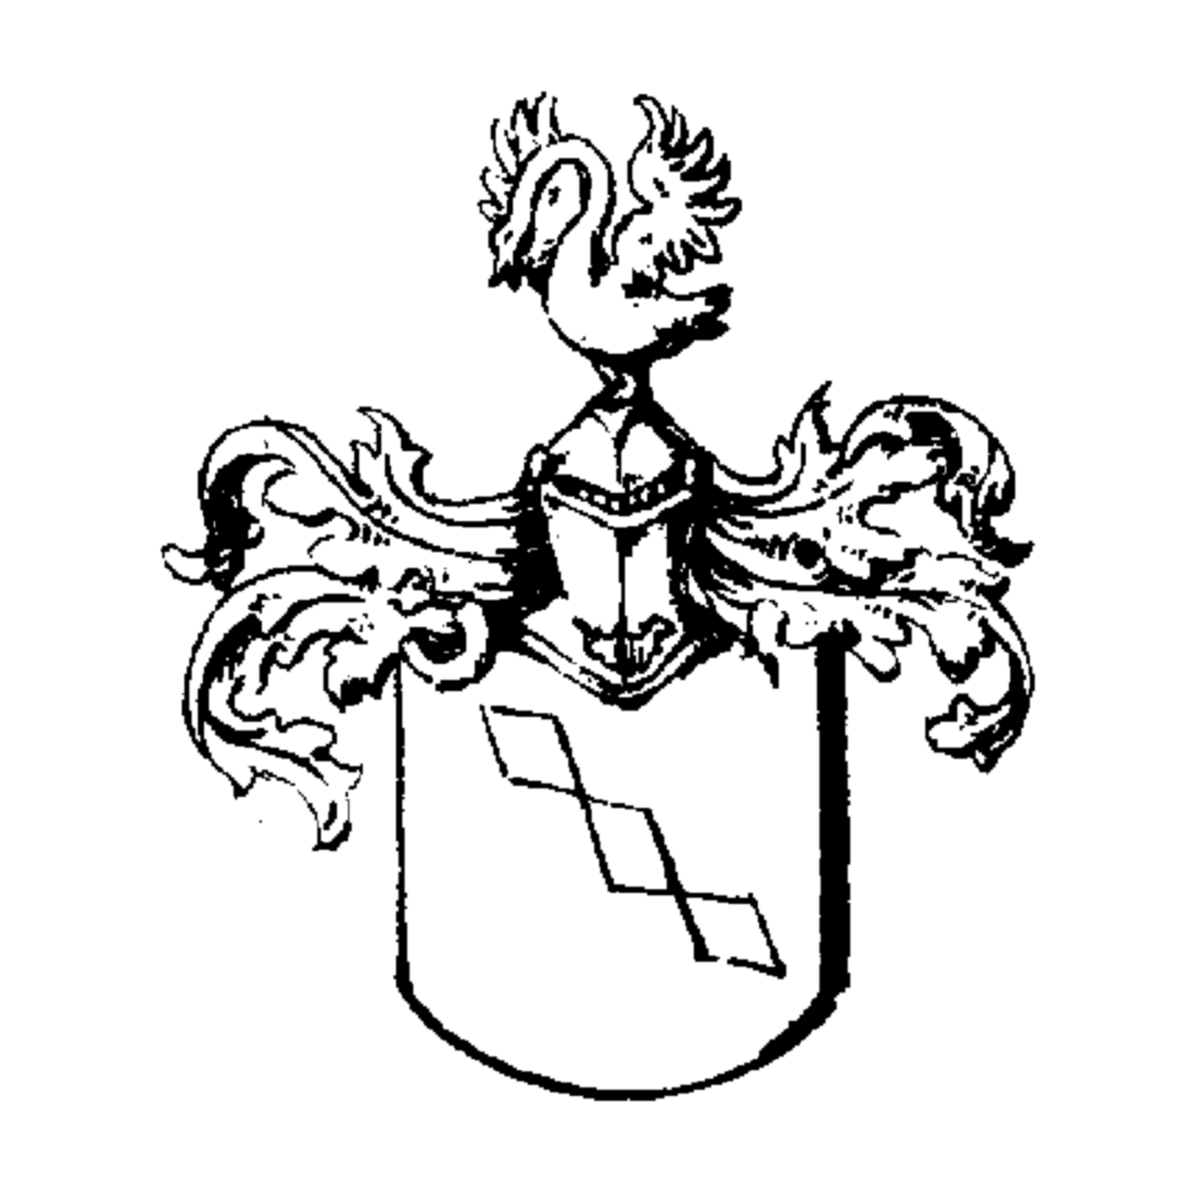 Brasão da família Rübendunst